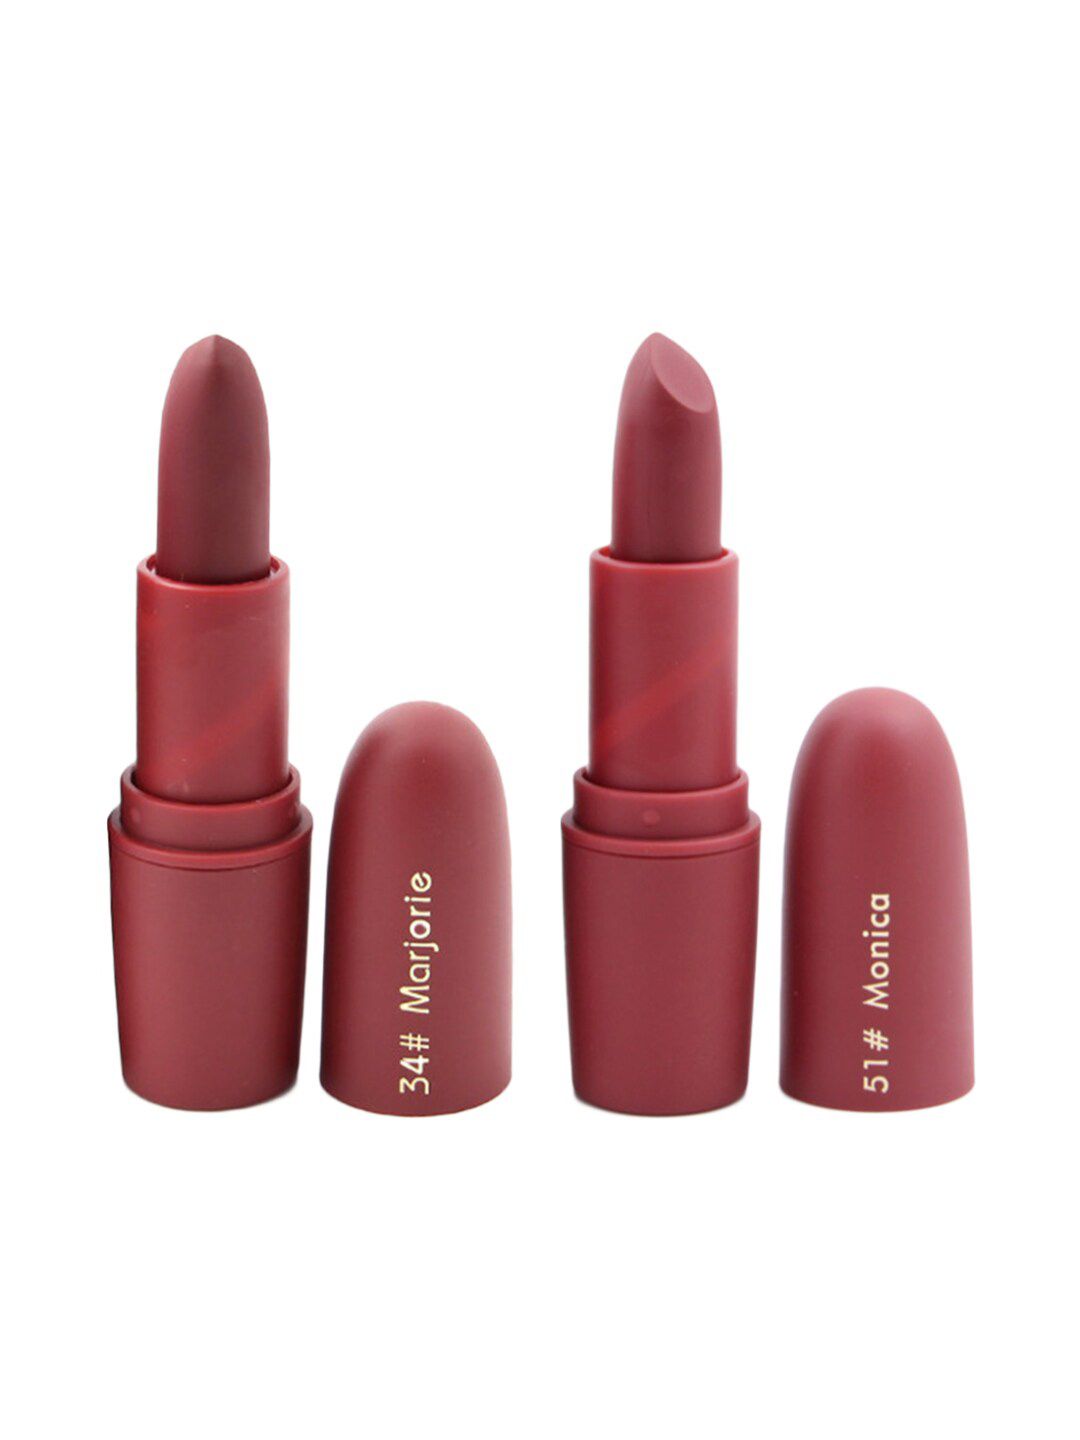 MISS ROSE Set of 2 Matte Creamy Lipsticks - Marjorie 34 & Monica 51 Price in India